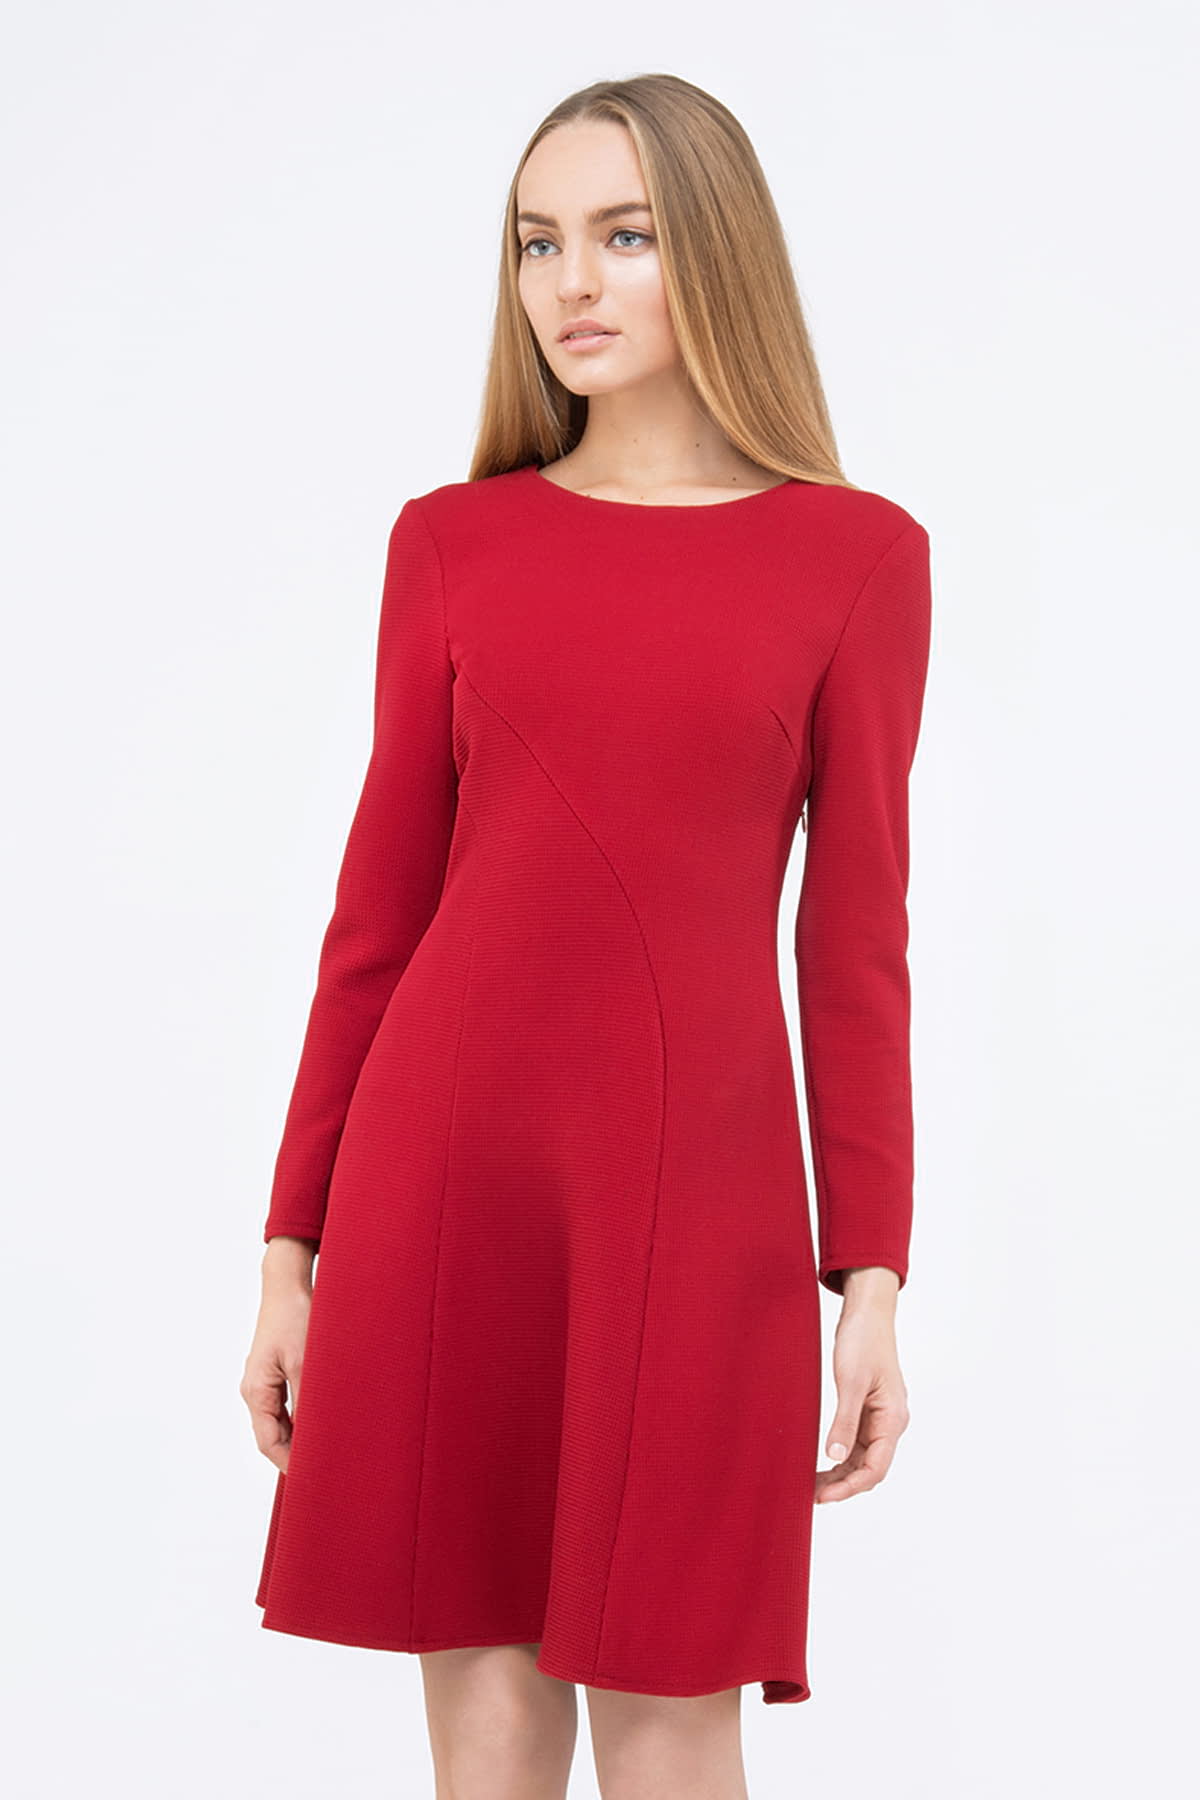 Red A-line dress , photo 1